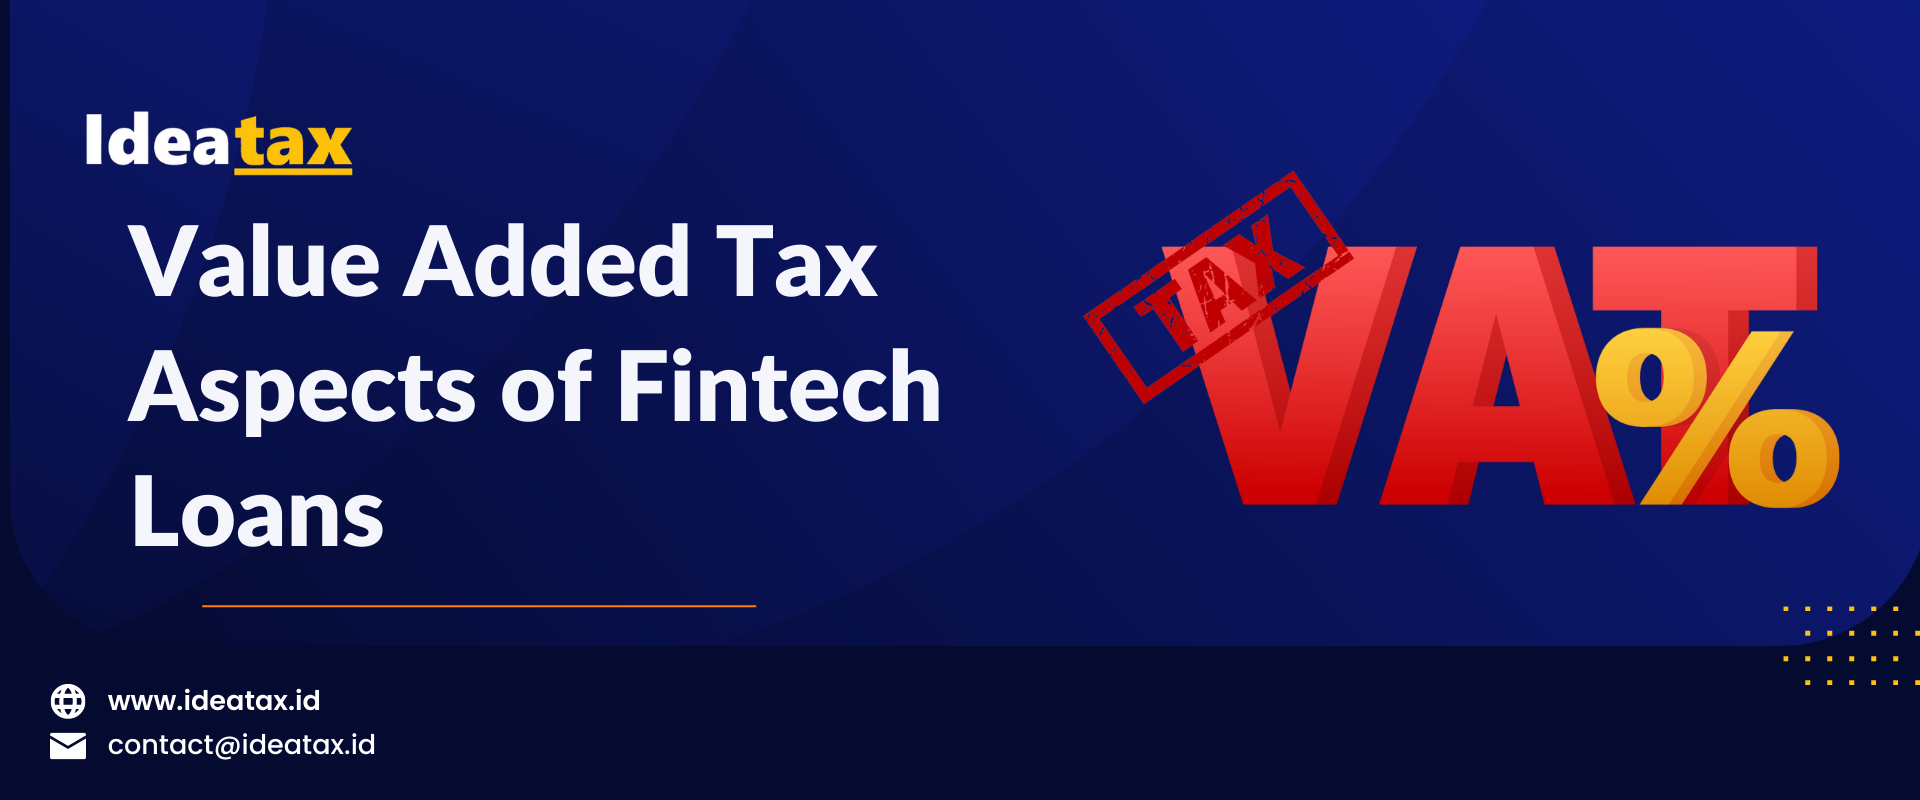 Value Added Tax Aspects of Fintech Loans